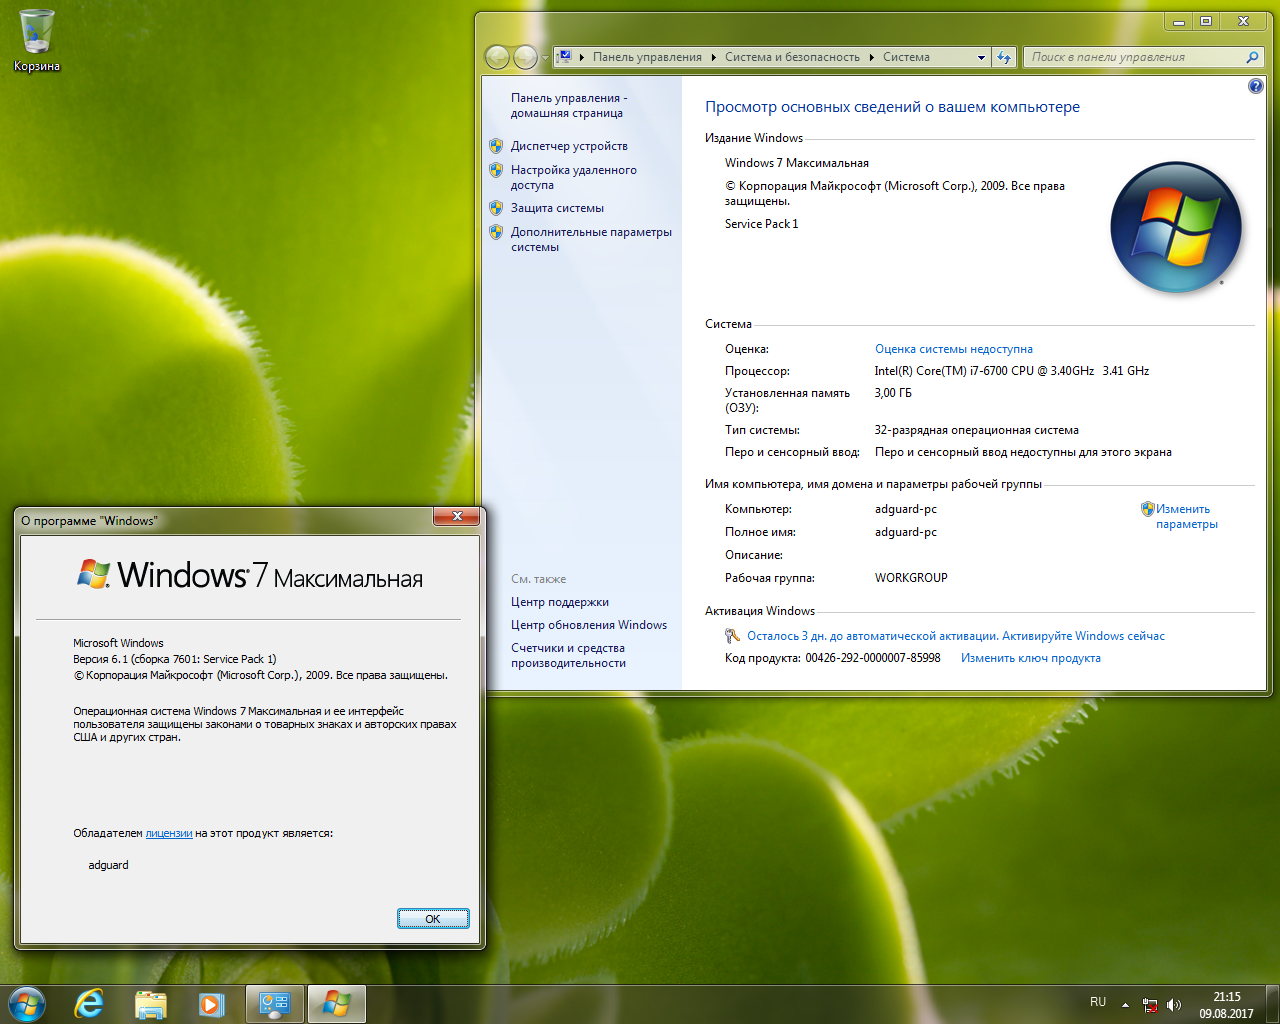 Активатор офиса для виндовс 7. Windows 7 максимальная. Windows 7 sp1 with update [7601.26321]. Сборка Windows 7 sp1 with update 7601.23862 AIO 26in2 Adguard (x86/x64).